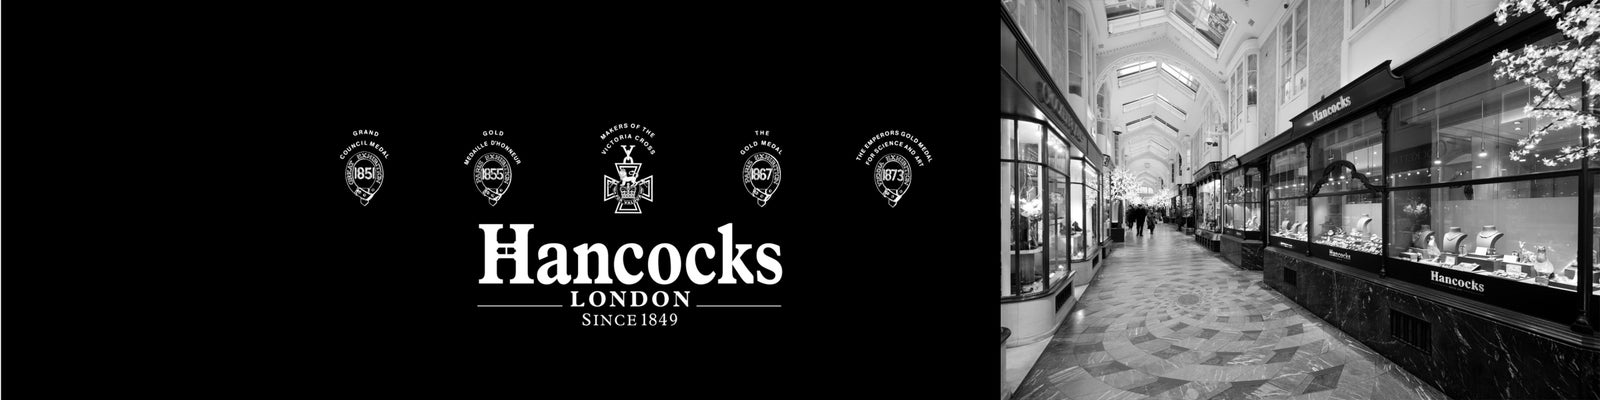 Hancocks